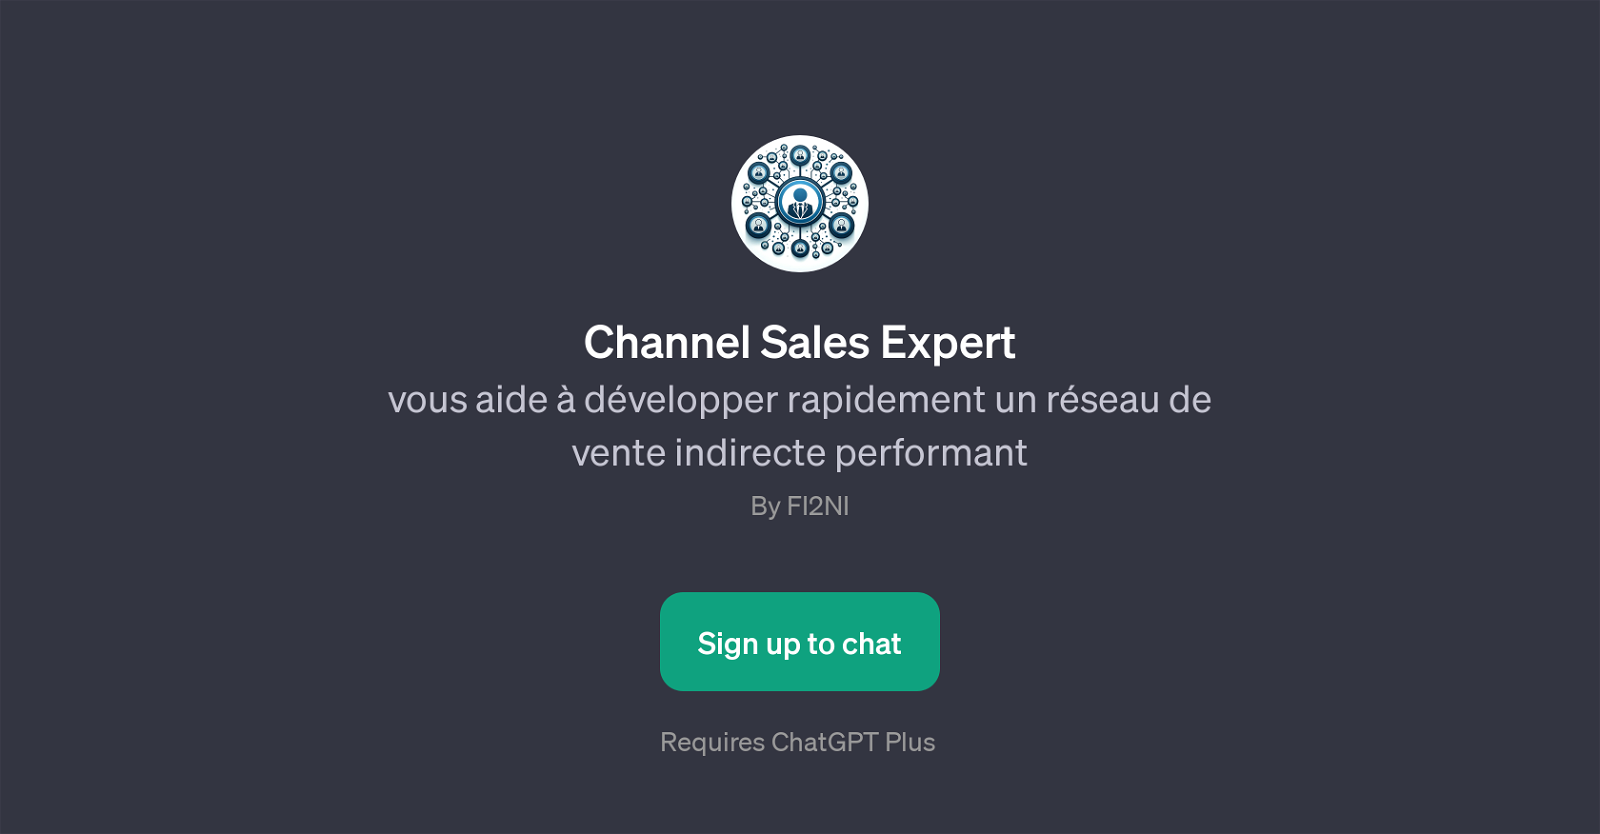 Channel Sales Expert website